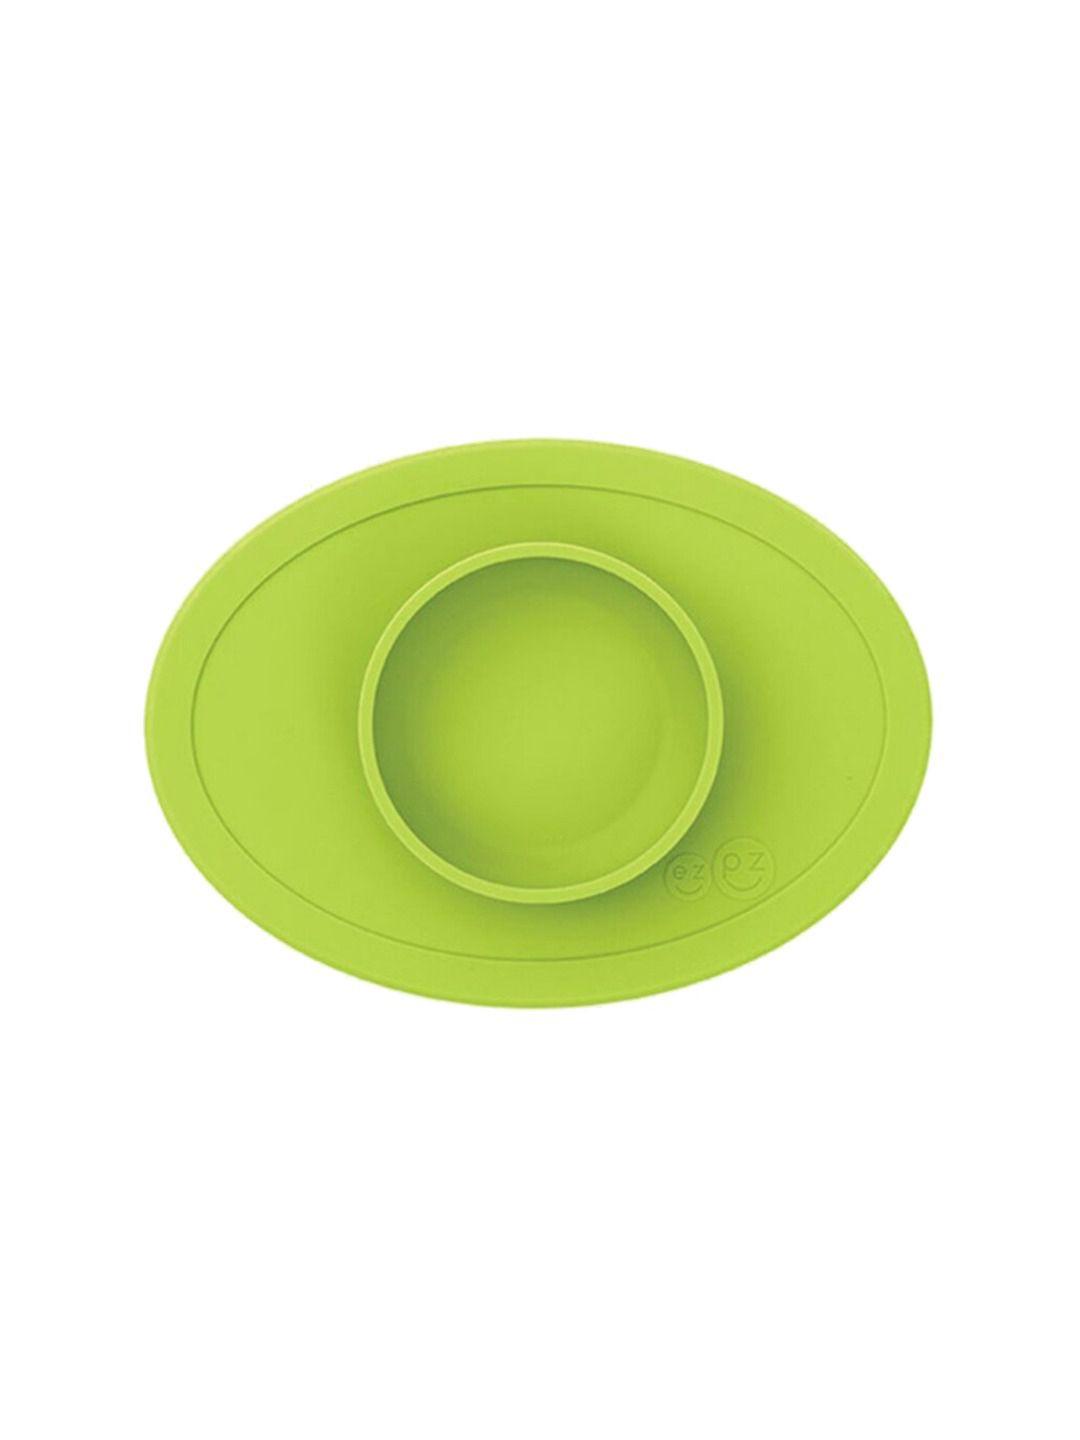 ezpz-unisex-kids-lime-green-fda-tiny-bowl